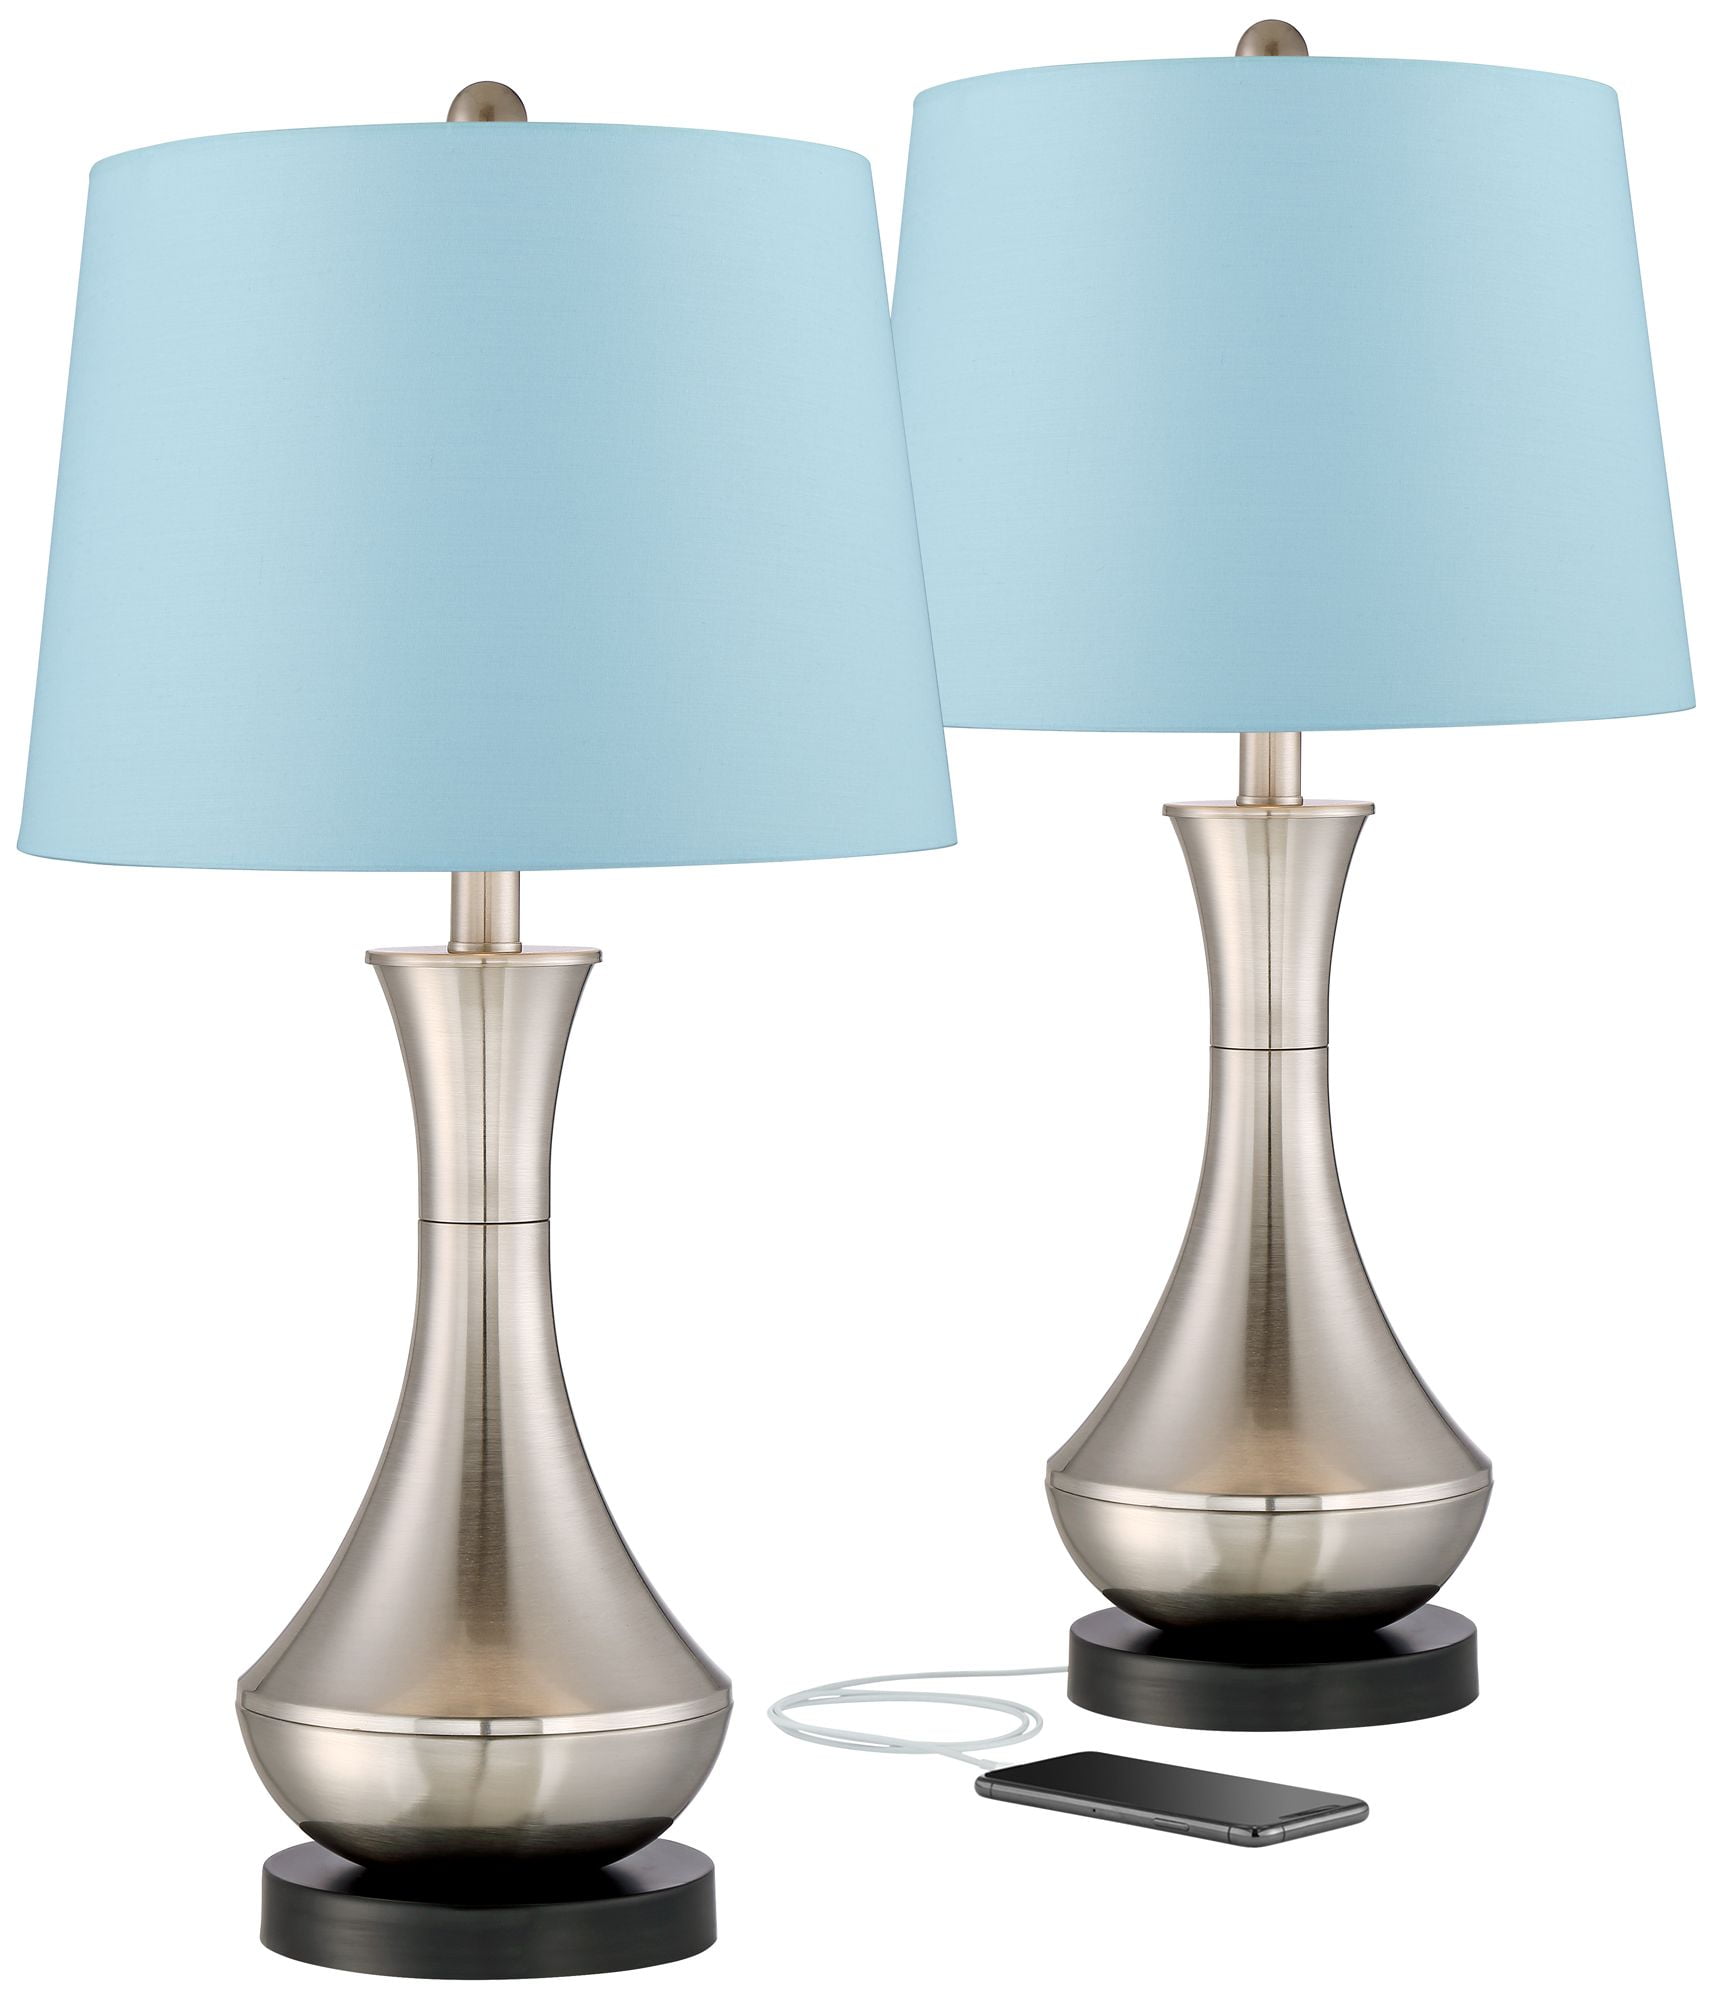 Lighting Contemporary Table Lamps 25.5" High Set of 2 with USB Charging Port Brushed Nickel Metal Blue Hardback Shade Living Room Bedroom - Walmart.com